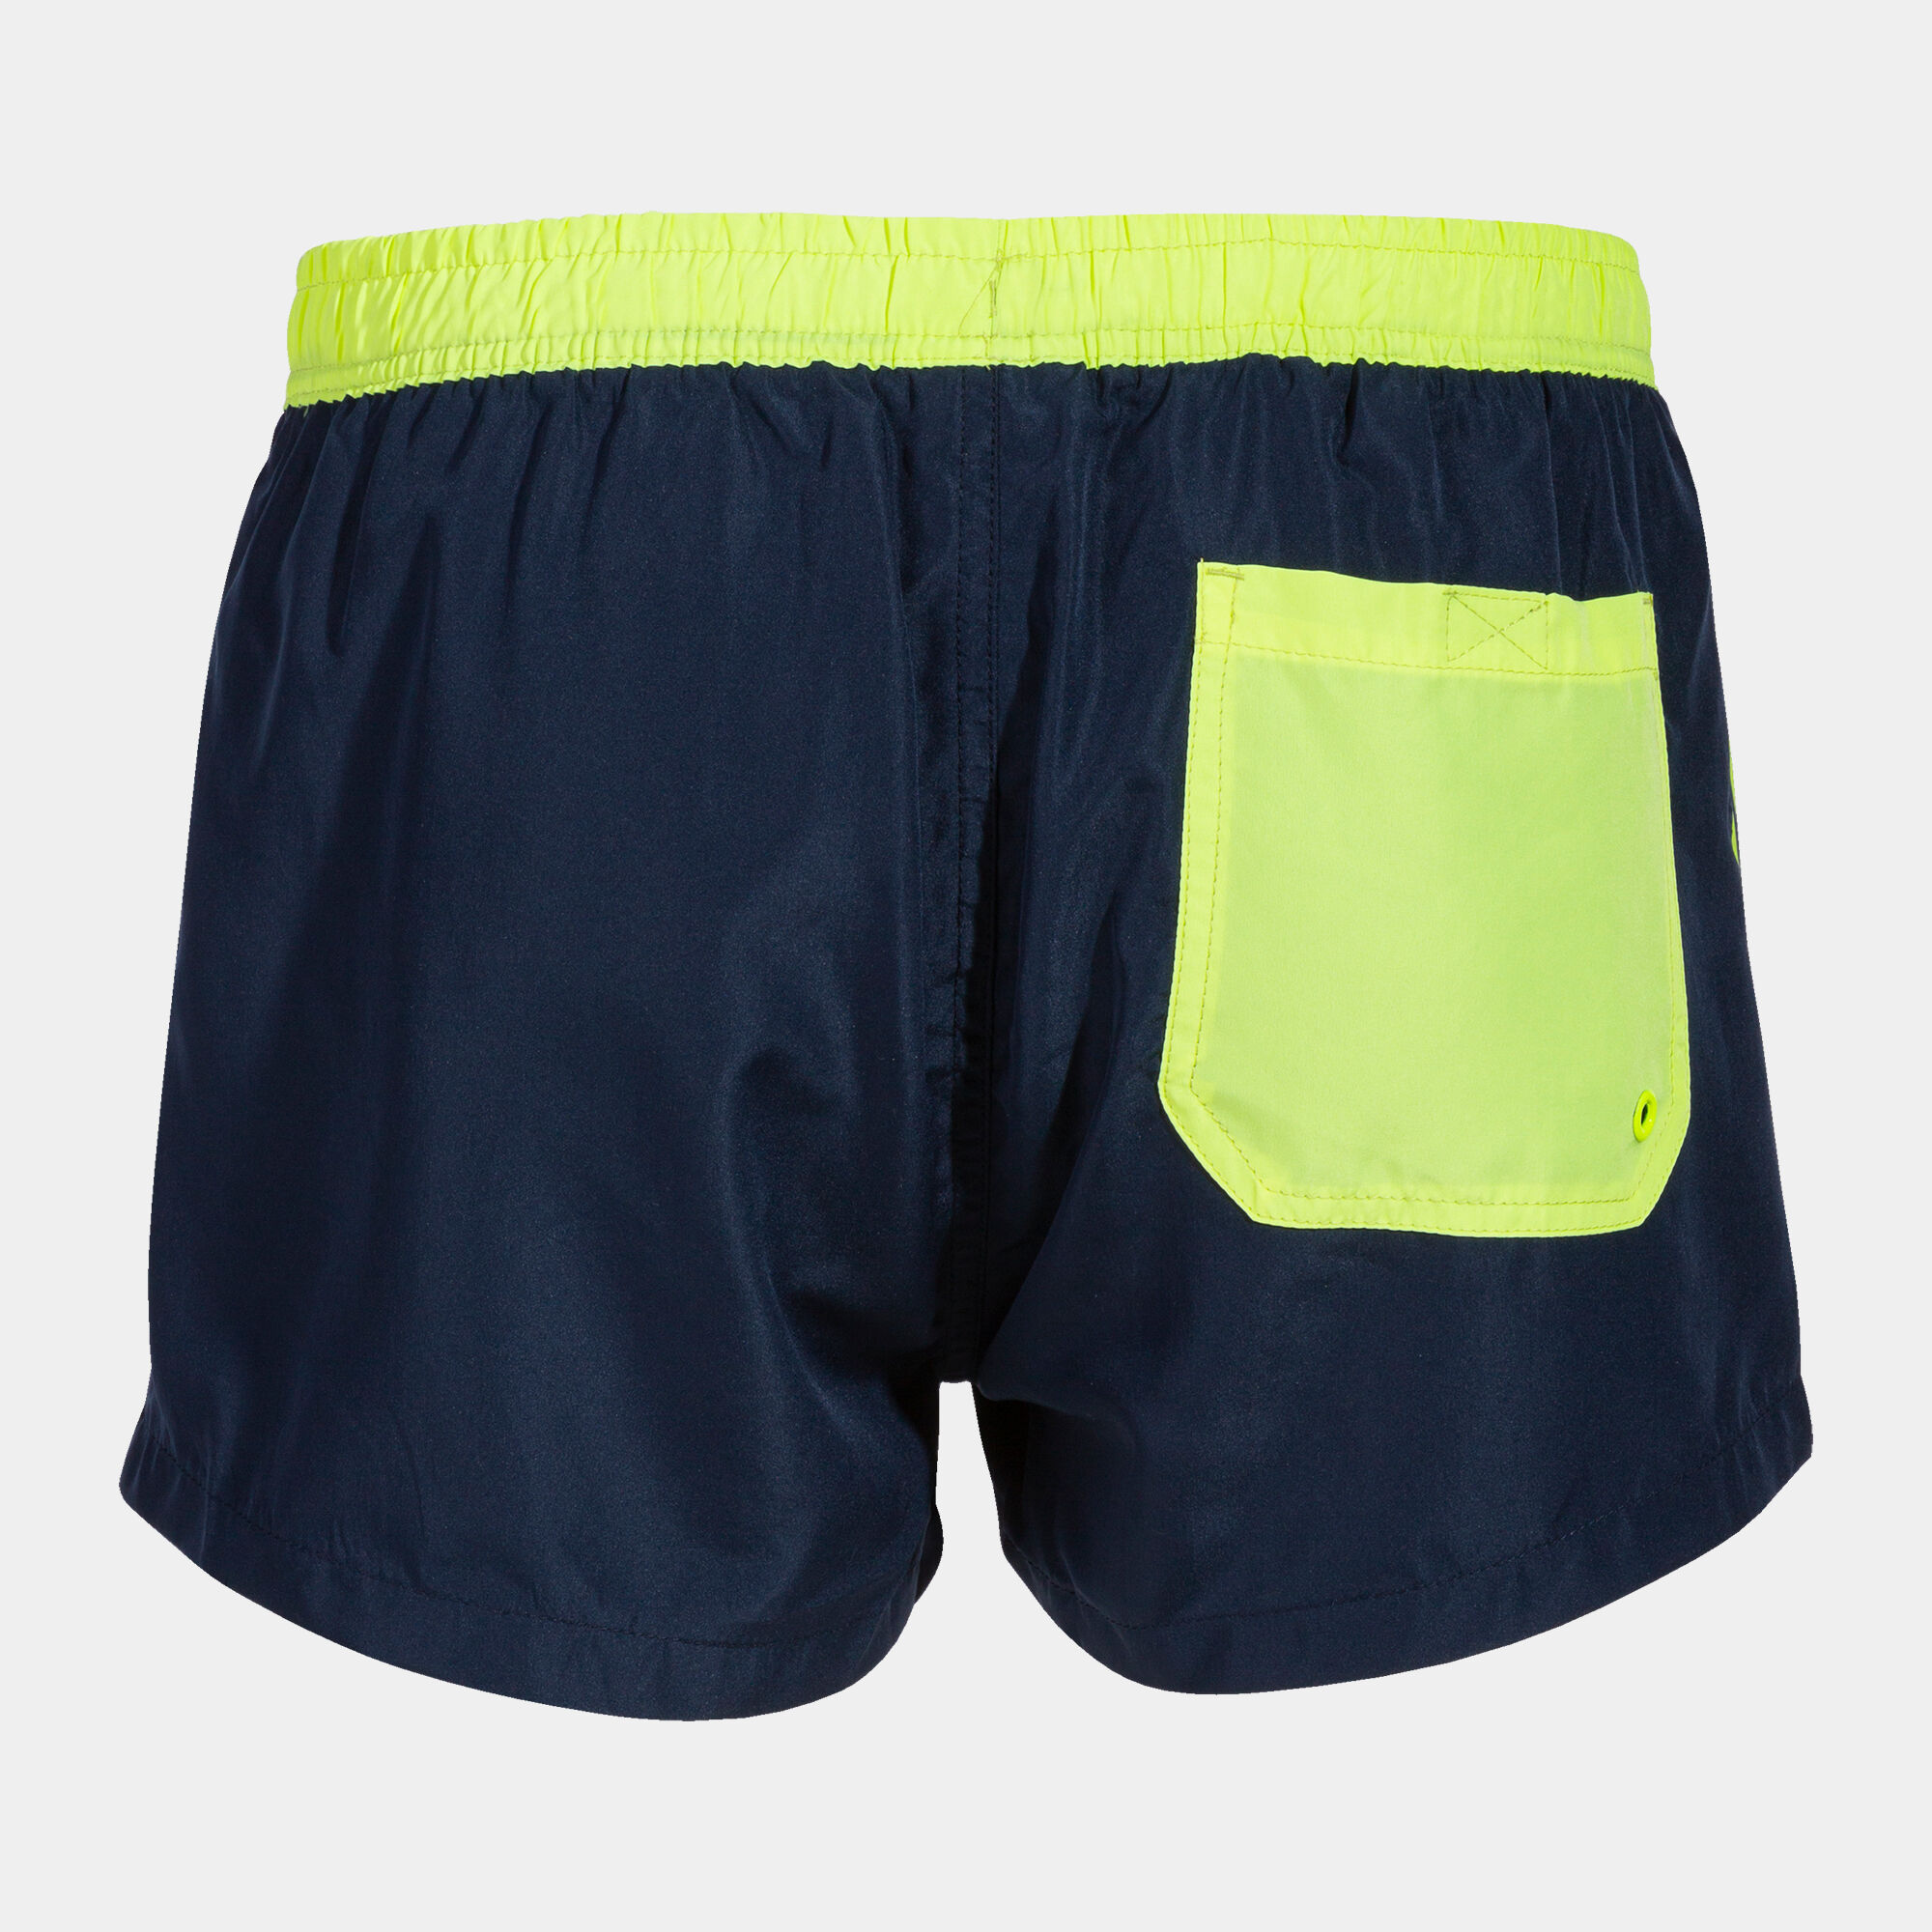 Swimming trunks man Classic navy blue fluorescent yellow